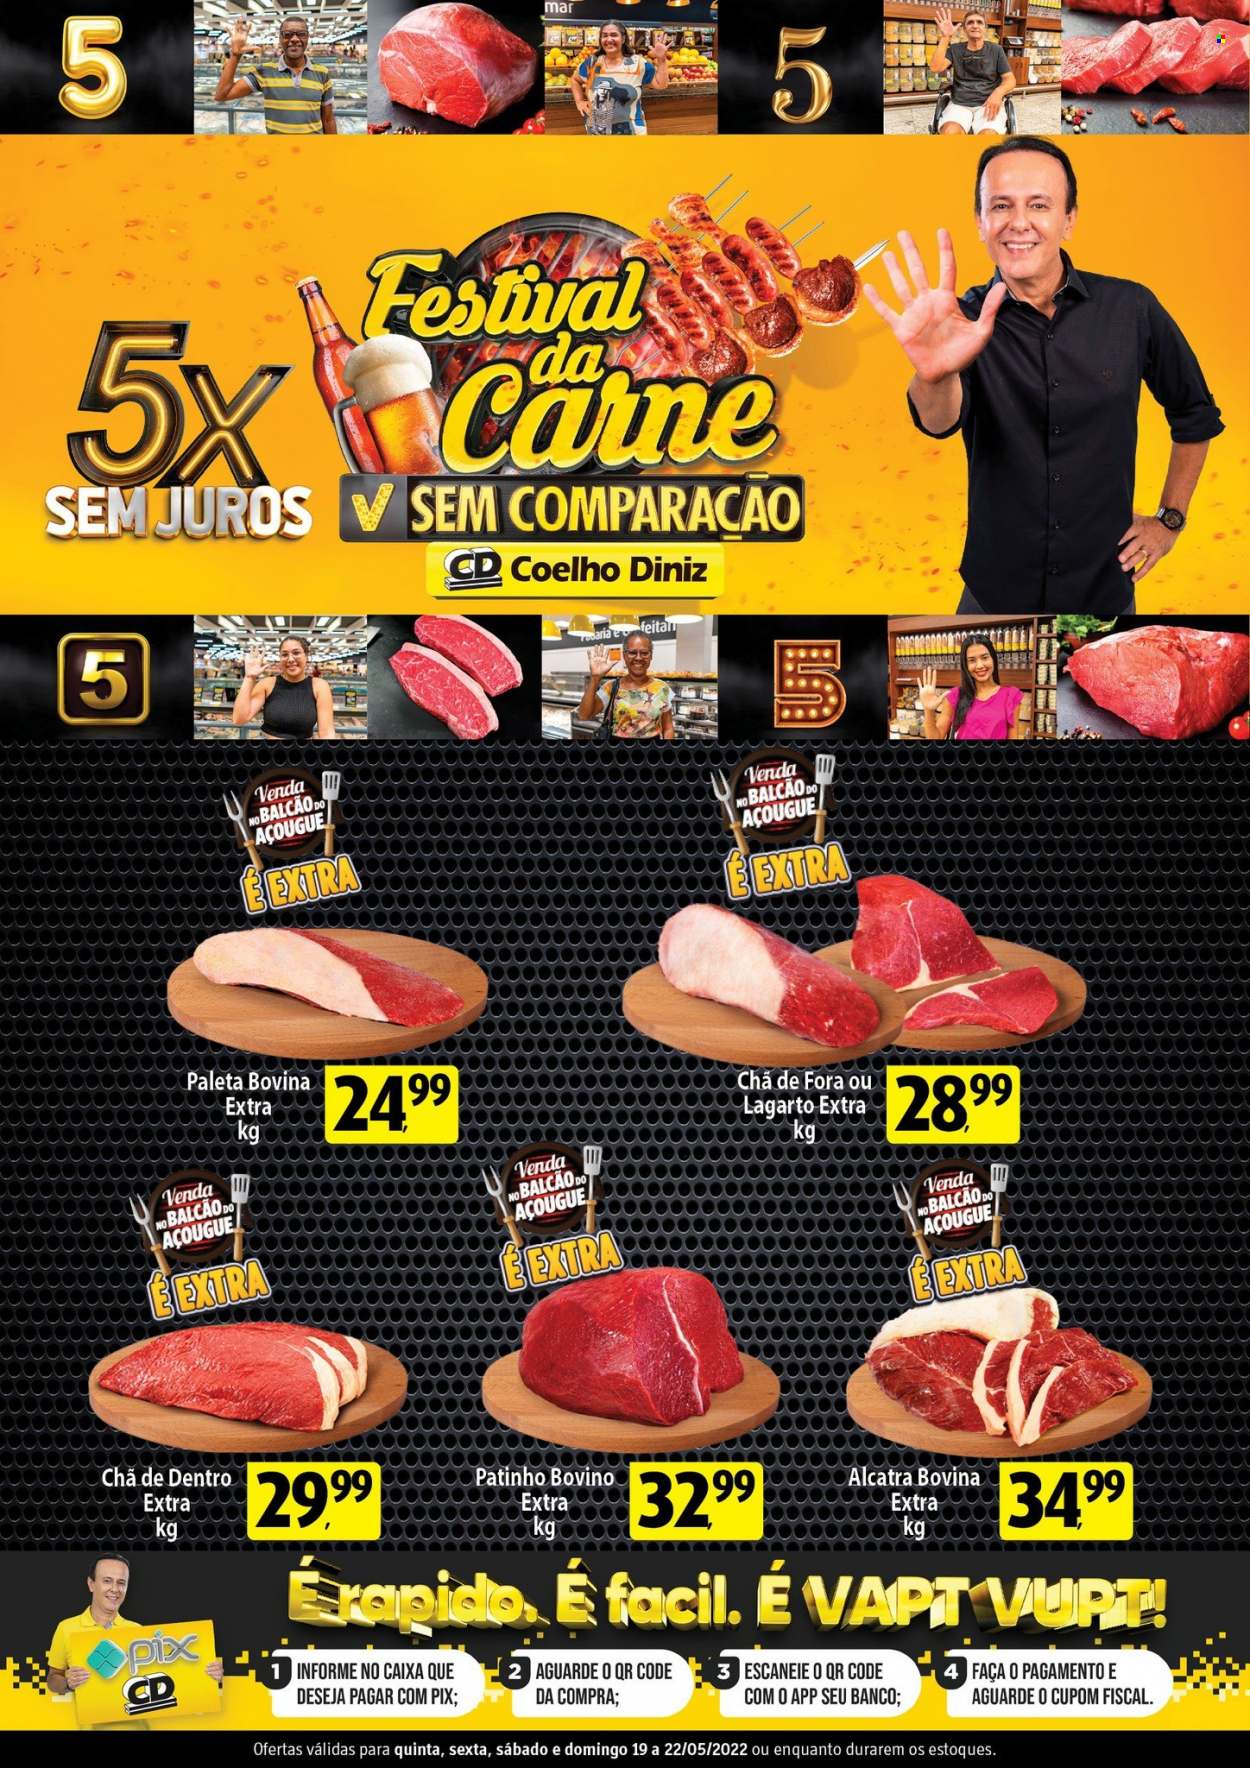 thumbnail - Folheto Coelho Diniz - 19/05/2022 - 22/05/2022 - Produtos em promoção - lagarto, alcatra, patinho bovino, carne bovina, chá, faca. Página 1.